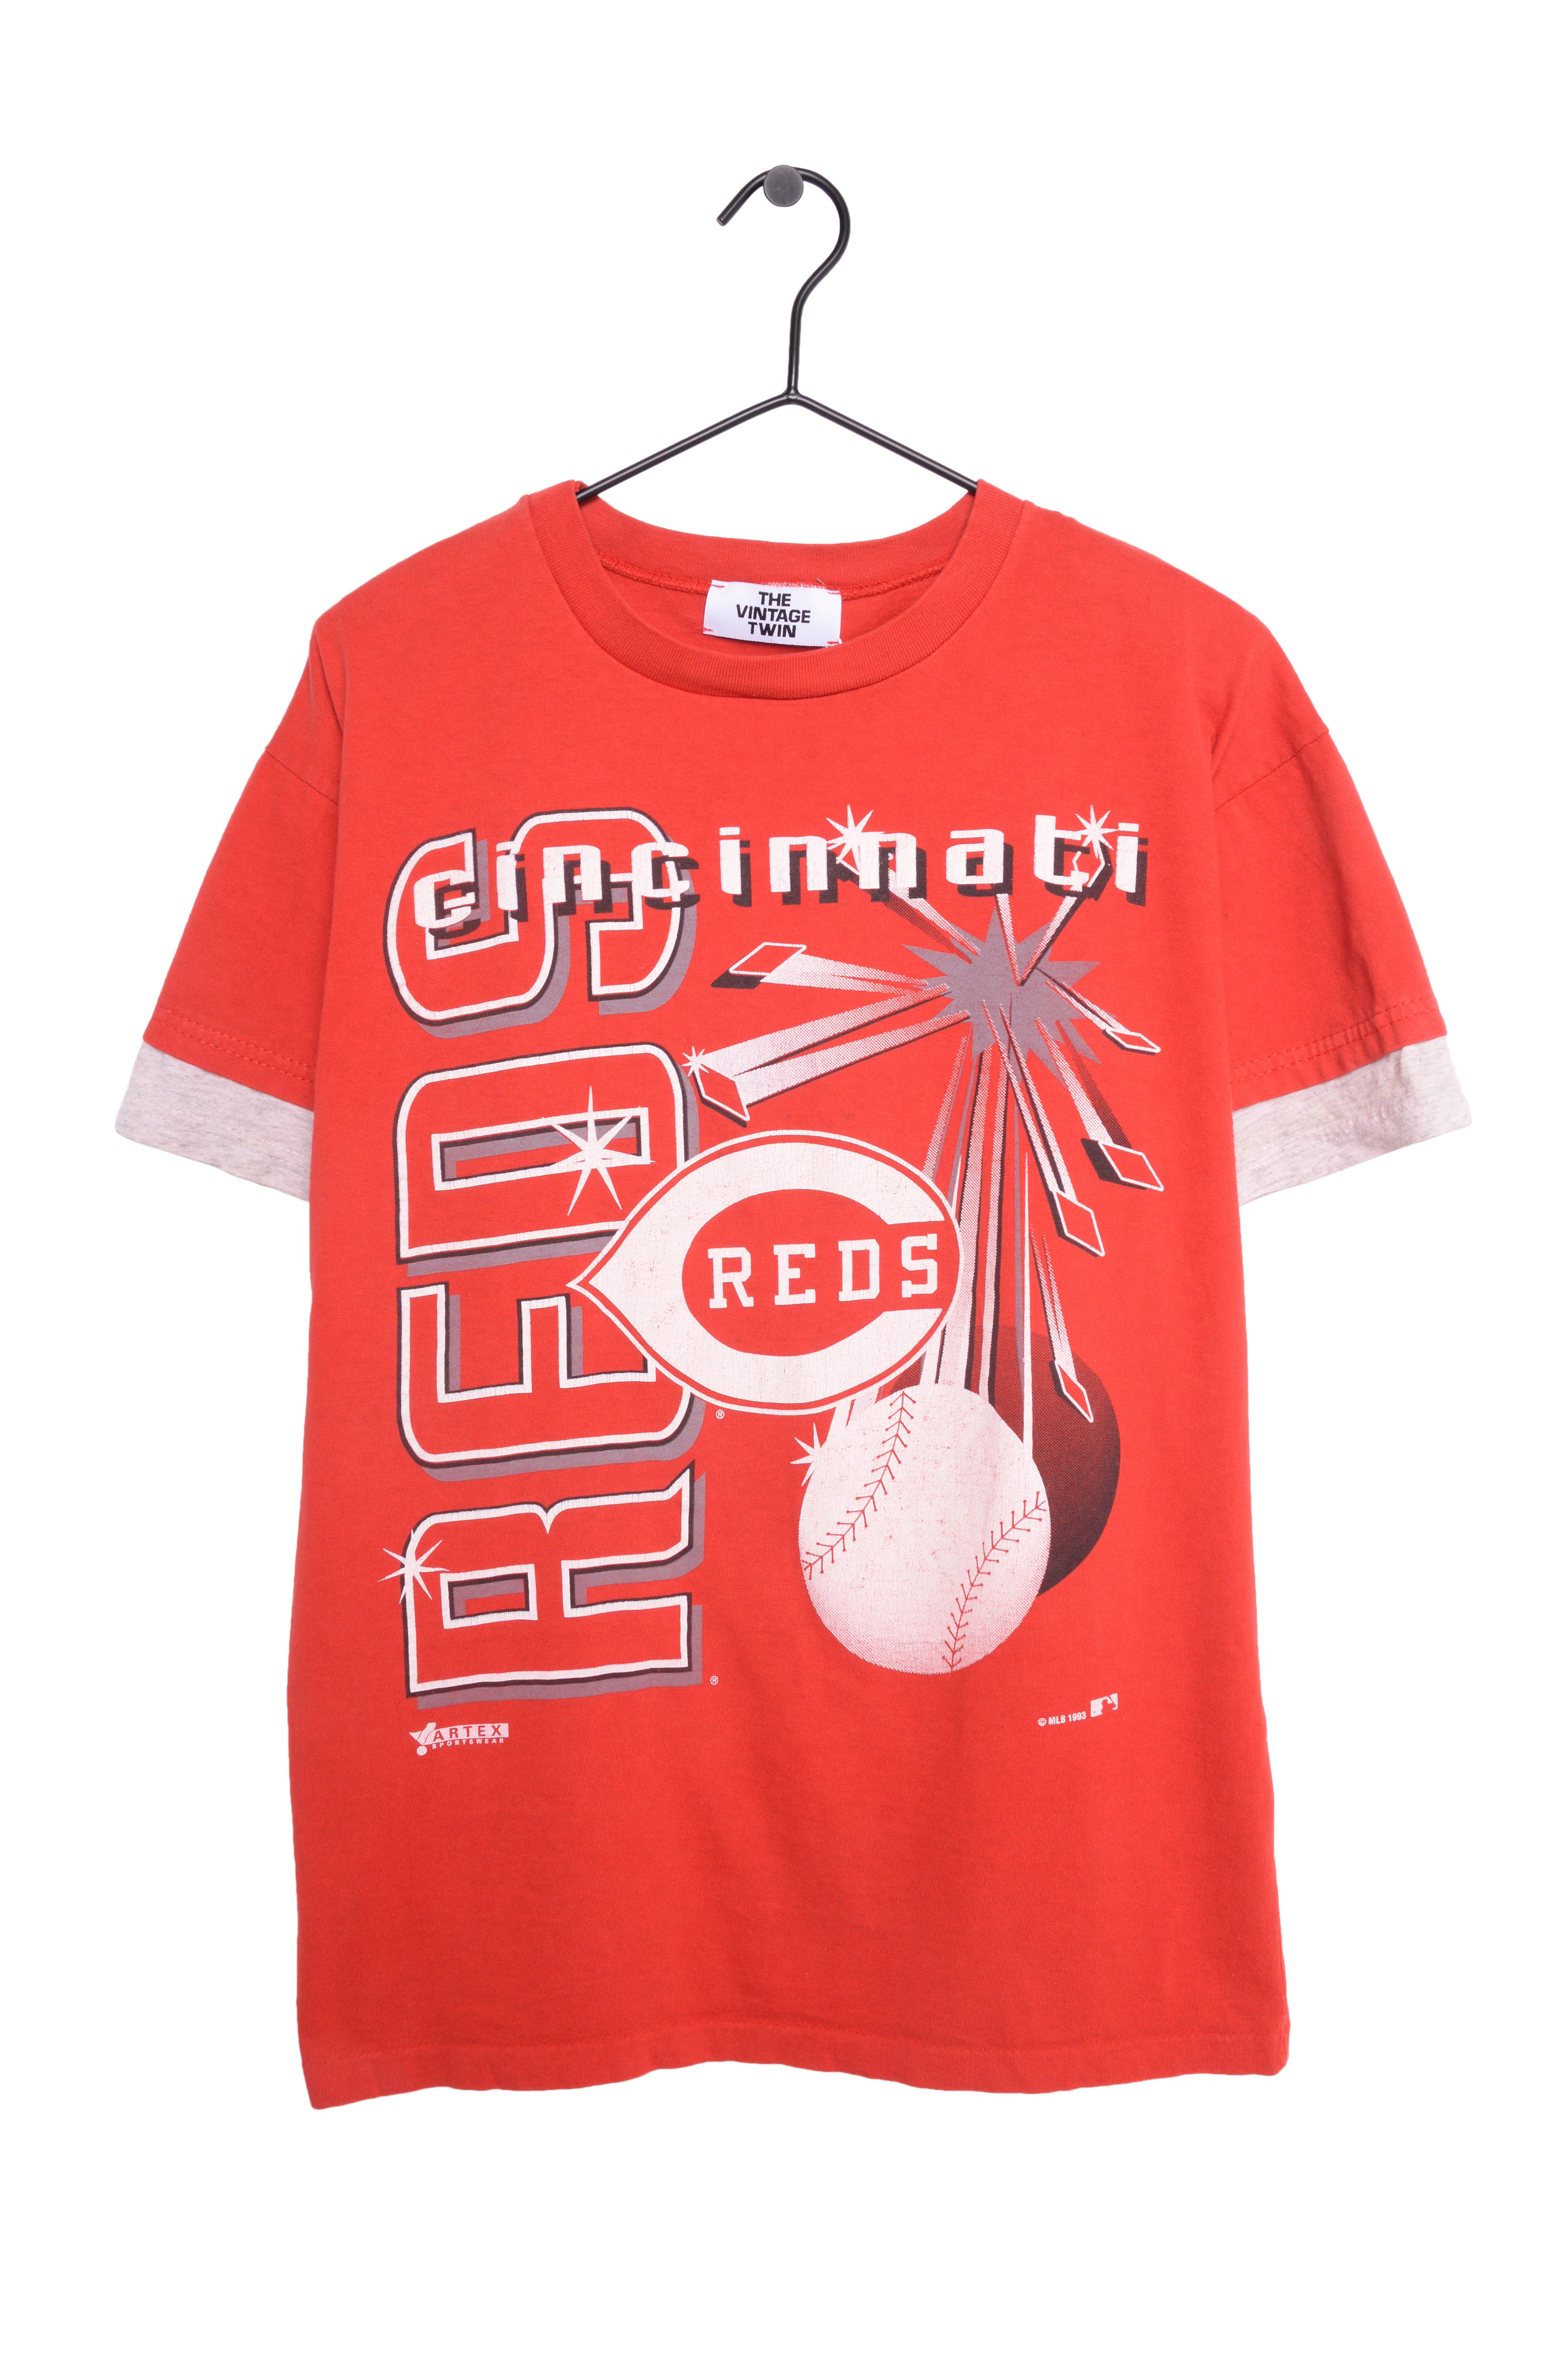 Vintage Cincinnati Reds T-Shirt (1990s)